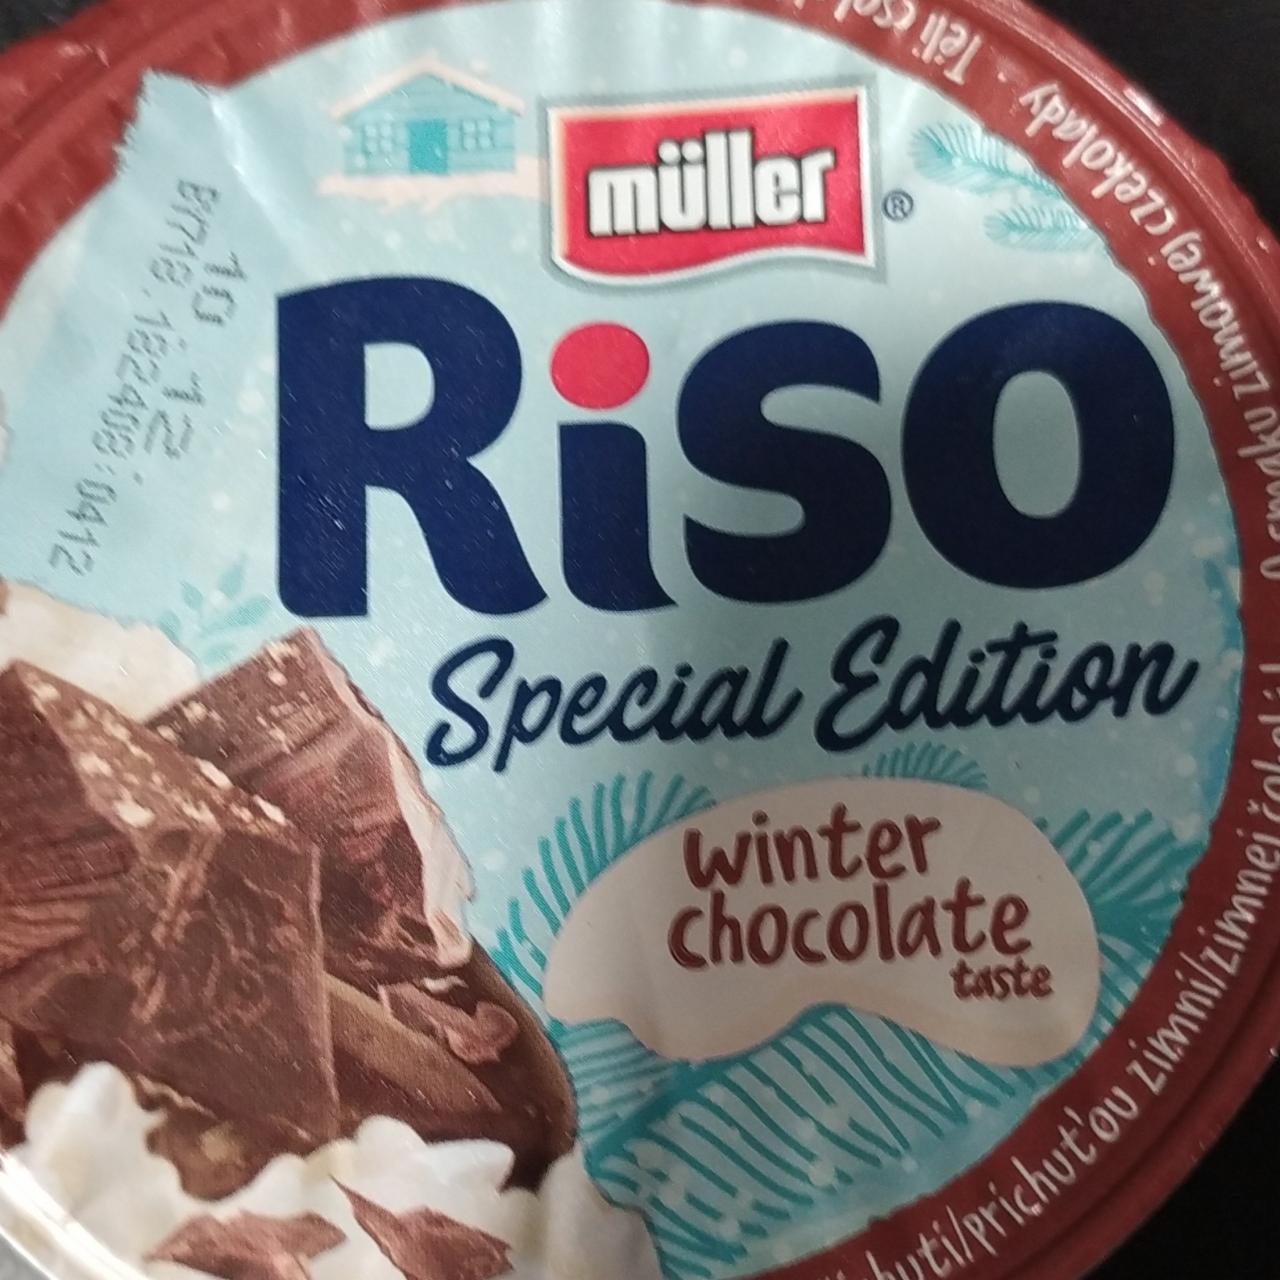 Zdjęcia - Riso Special Edition Winter chocolate taste Müller